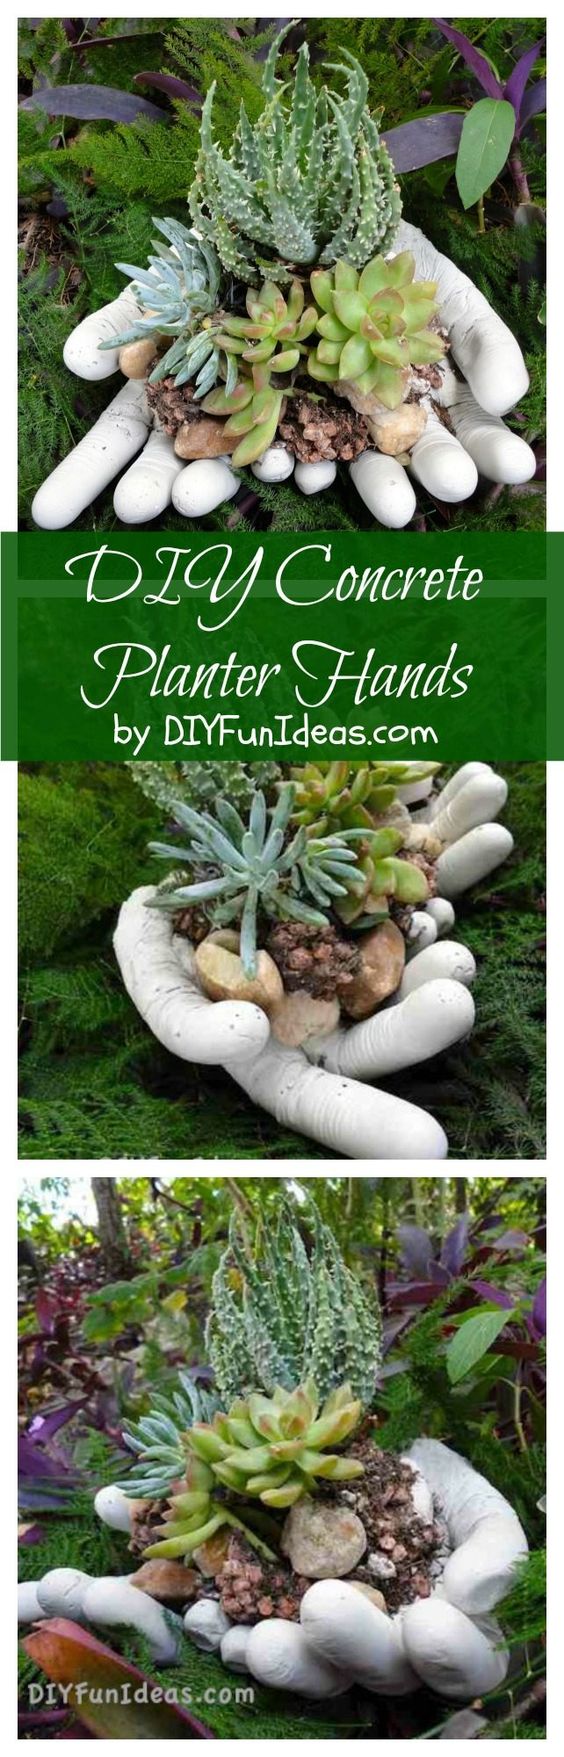 DIY Concrete Hand Planters. 